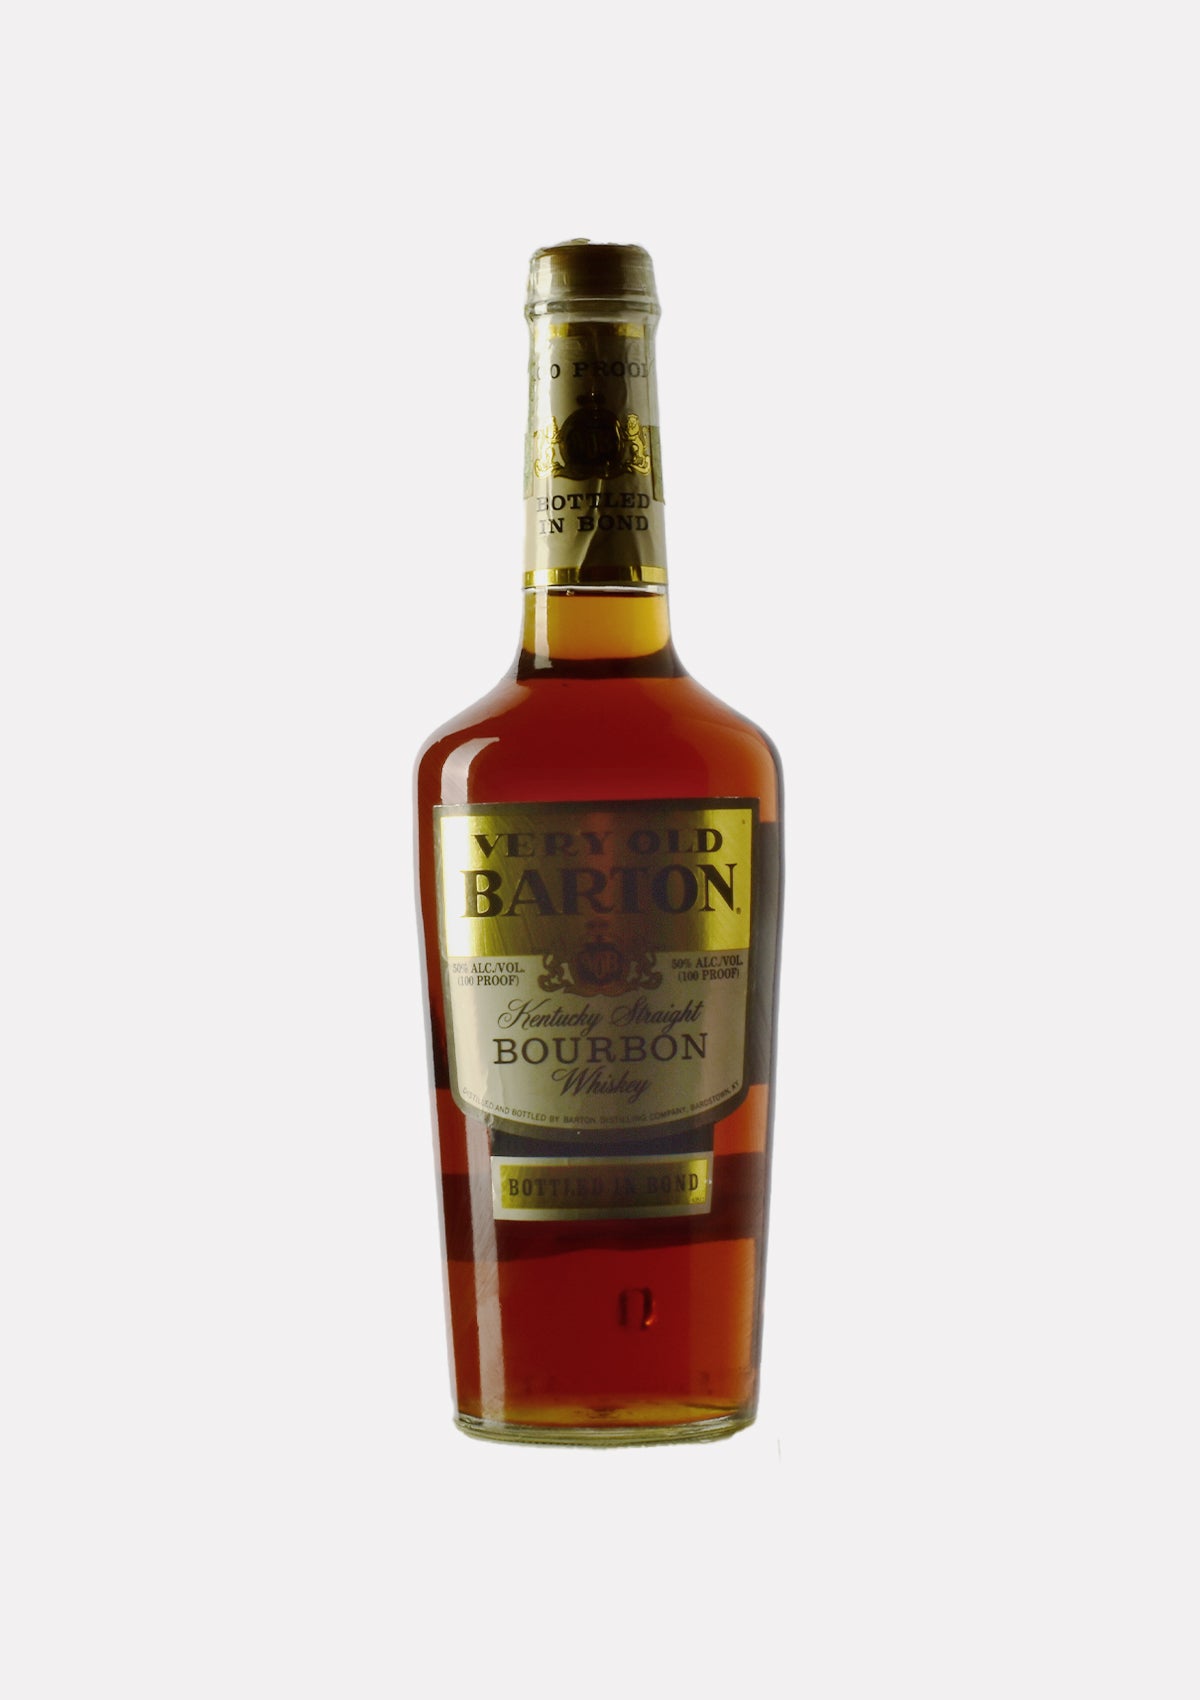 Very Old Barton Bottled in Bond